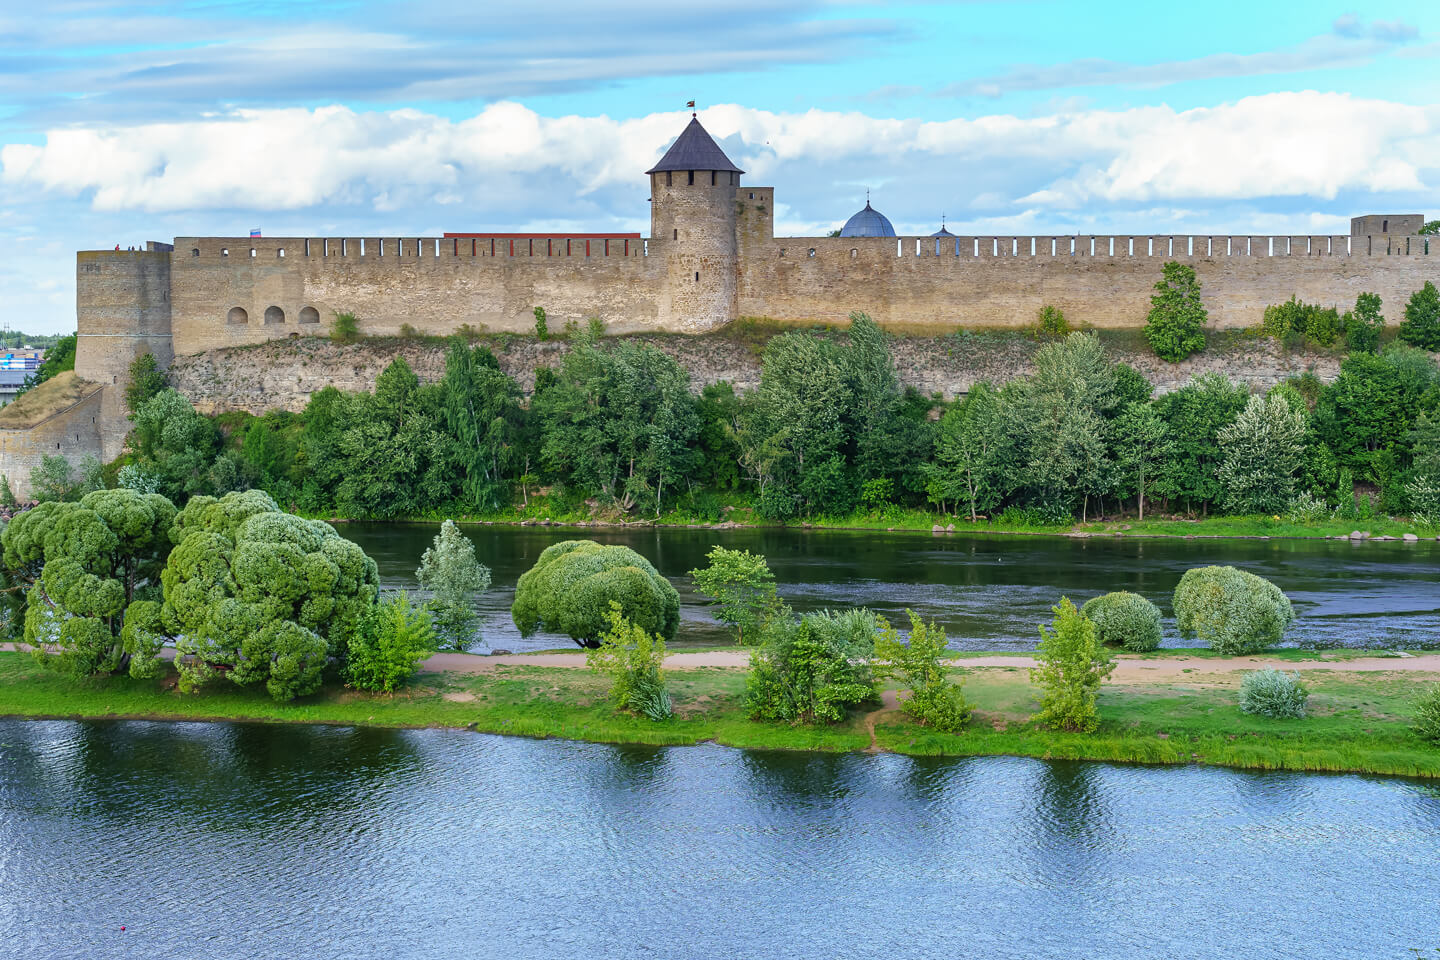 # Narva Fortress